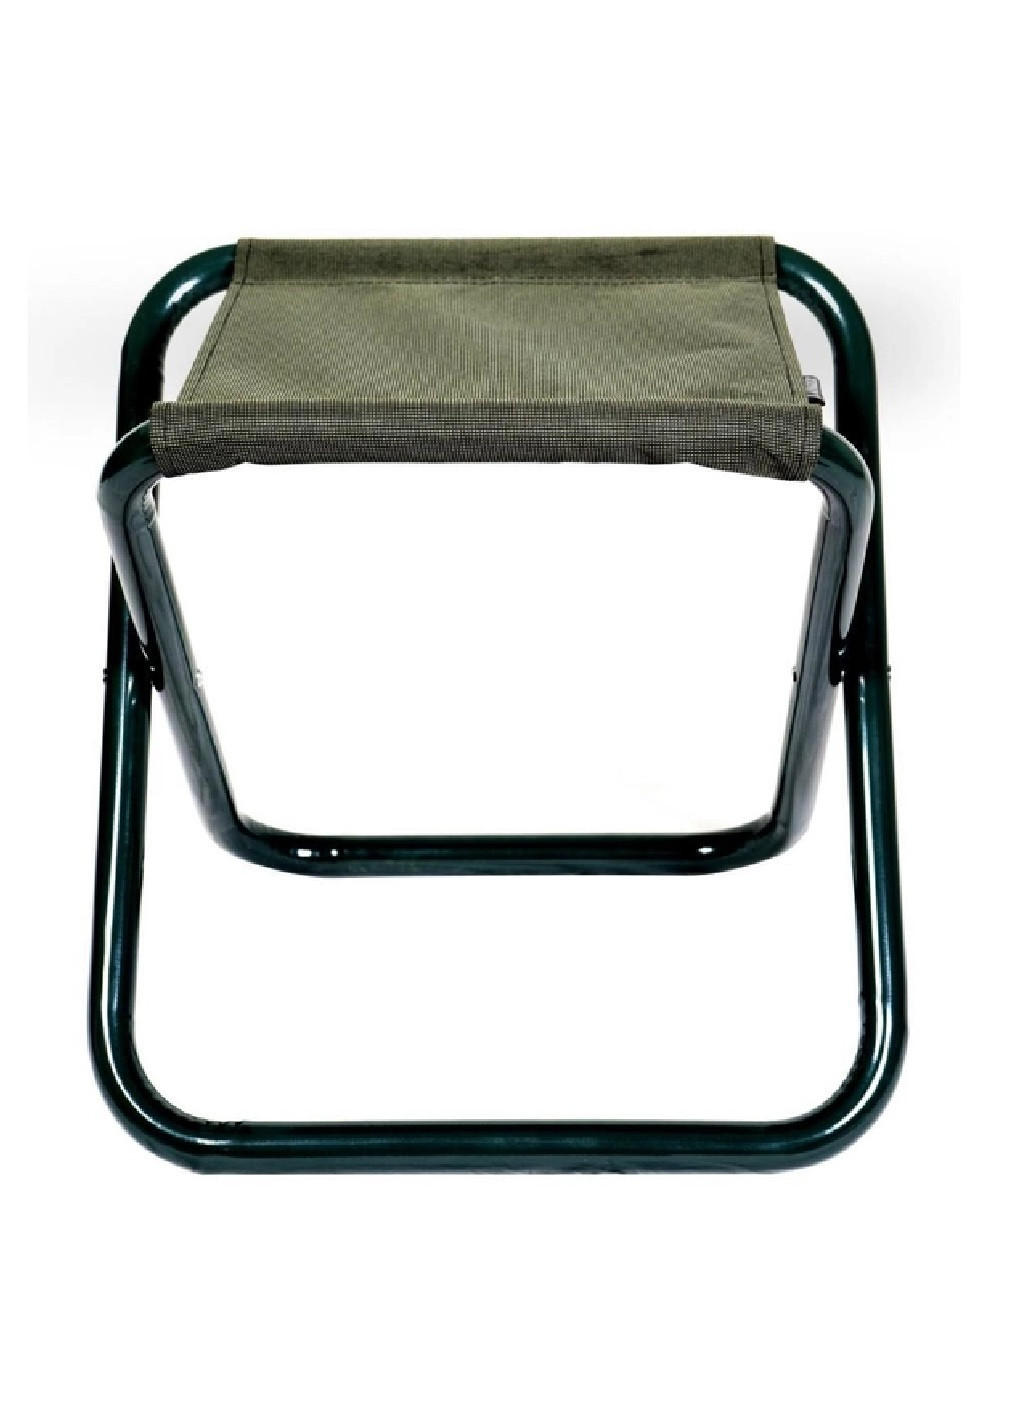 Раскладной легкий стул без спинки для отдыха дачи рыбалки туризма кемпинга 39х33,5х42 см (475301-Prob) Зеленый Unbranded (265391185)